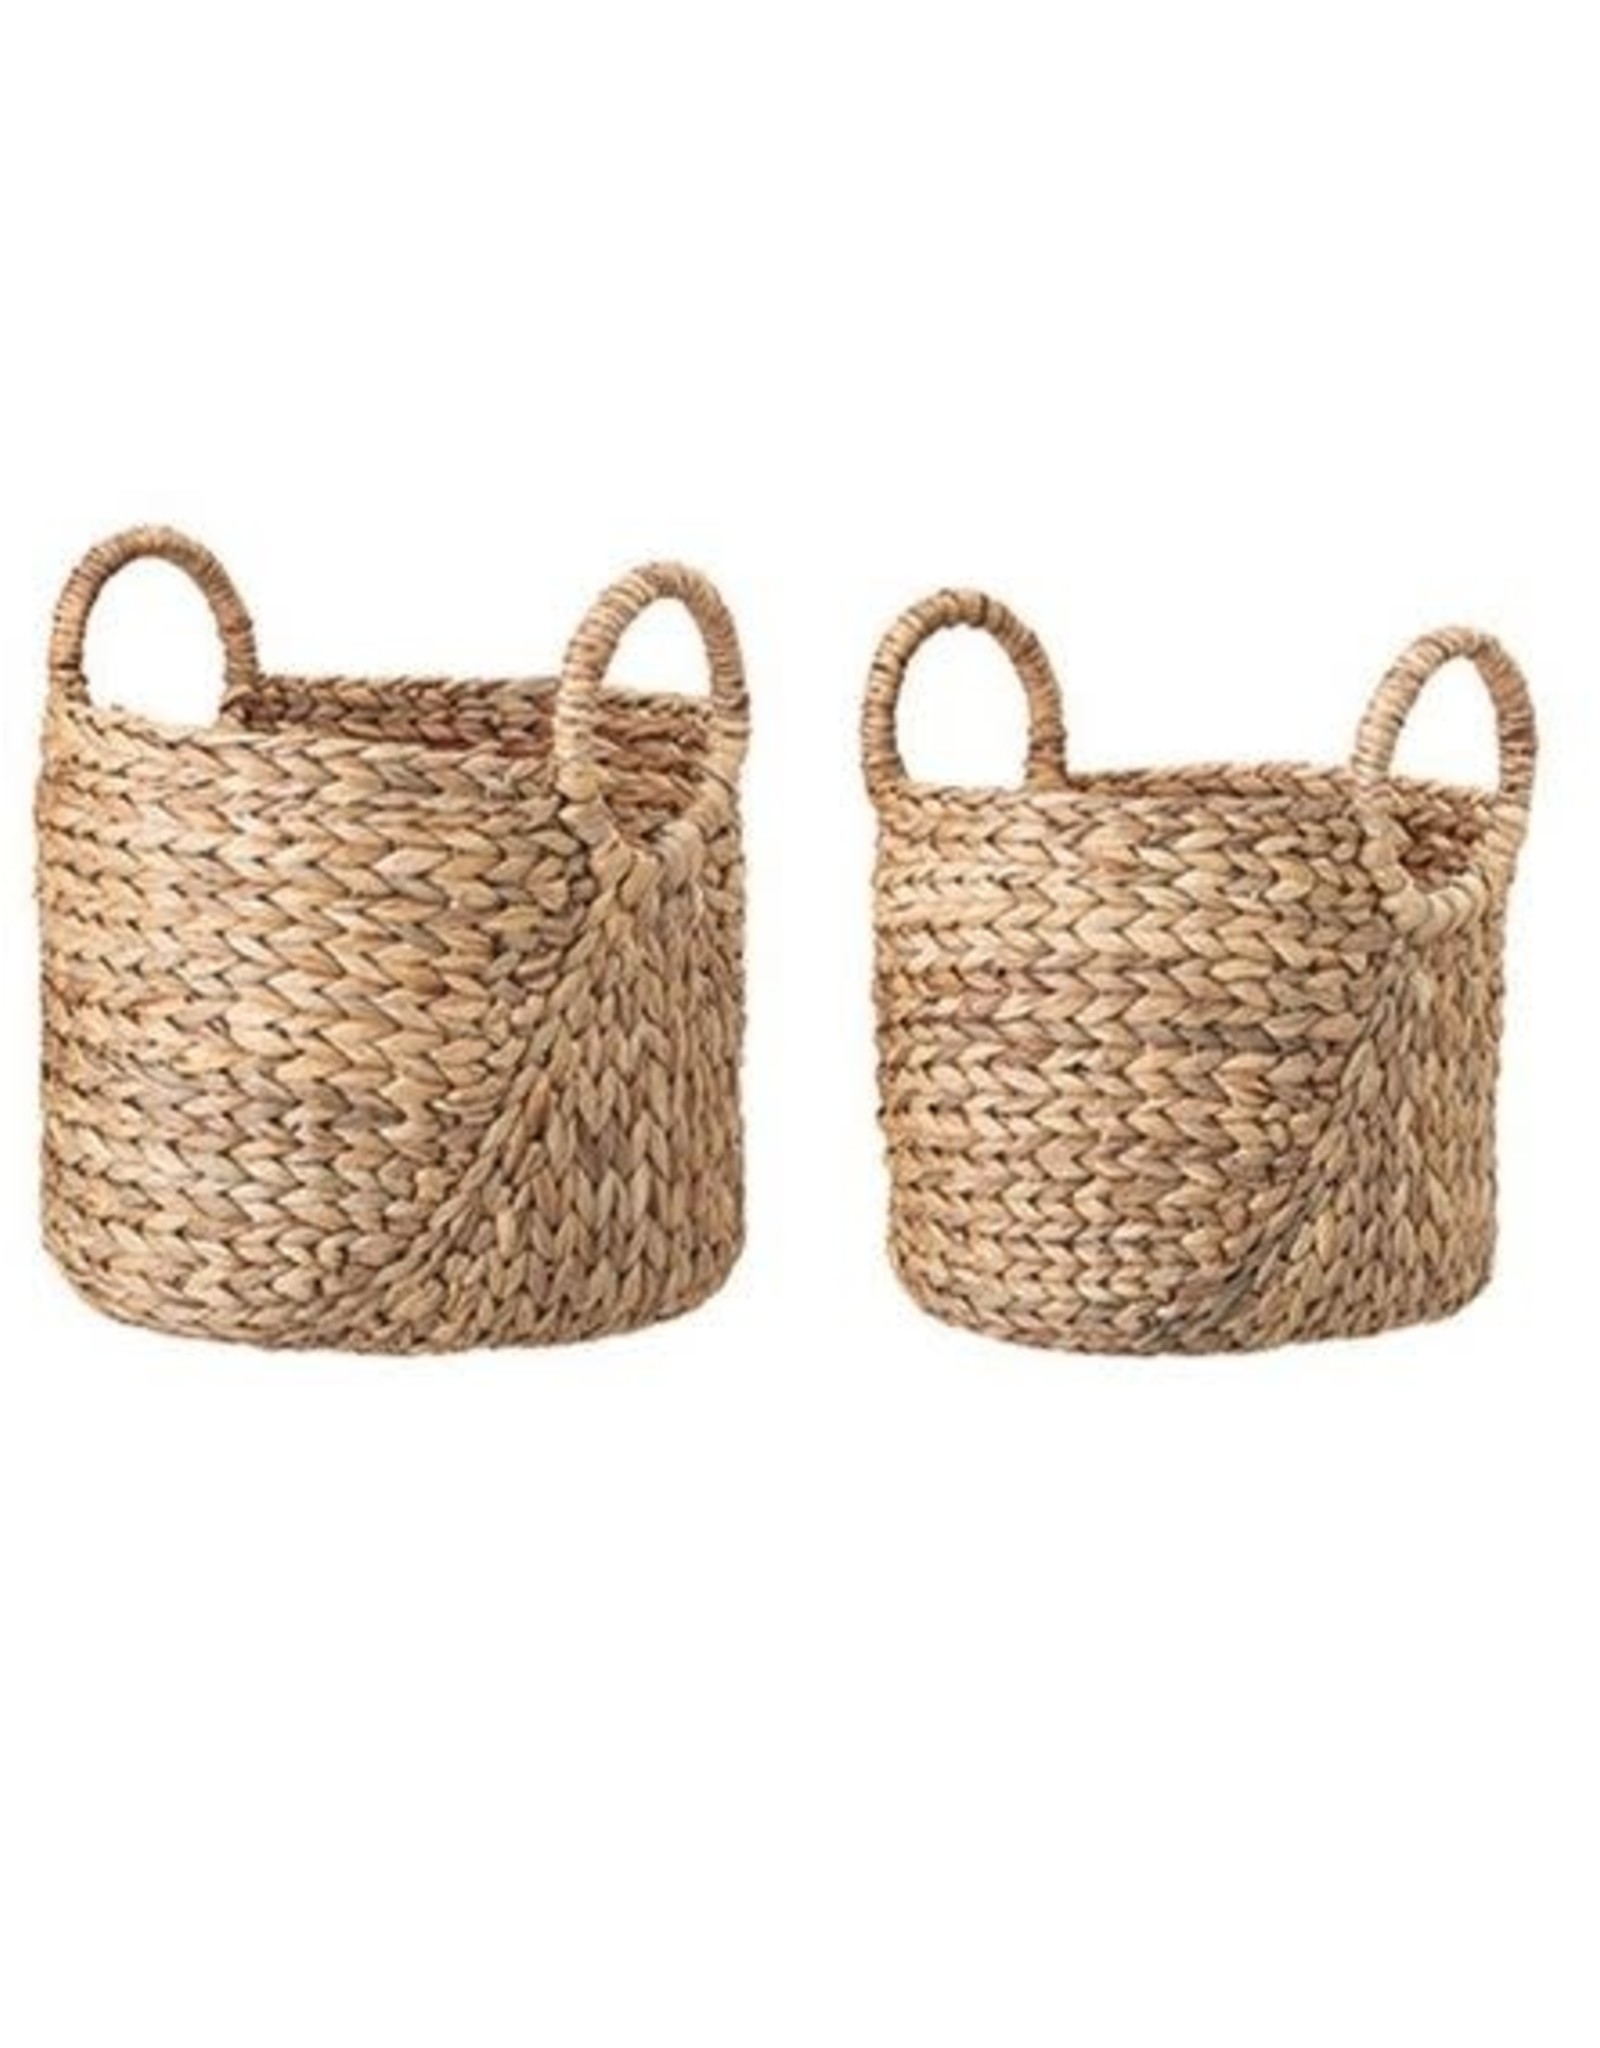 Hand-Woven Seagrass Baskets w/ Round Handles